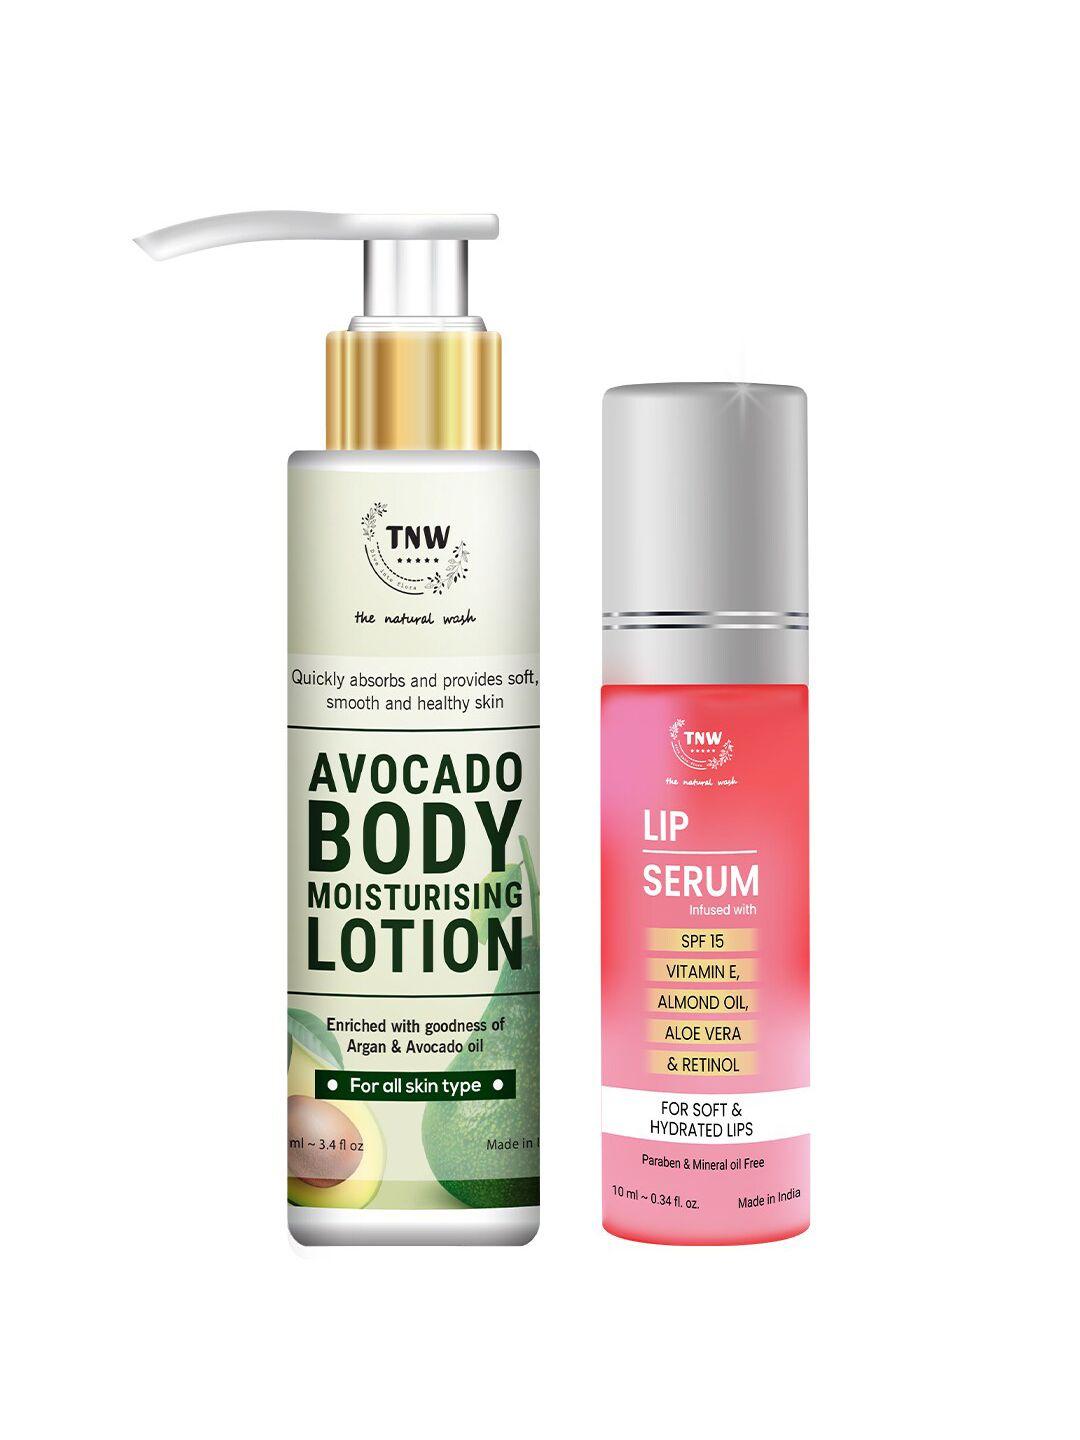 tnw the natural wash lip serum and avocado body moisturizing lotion